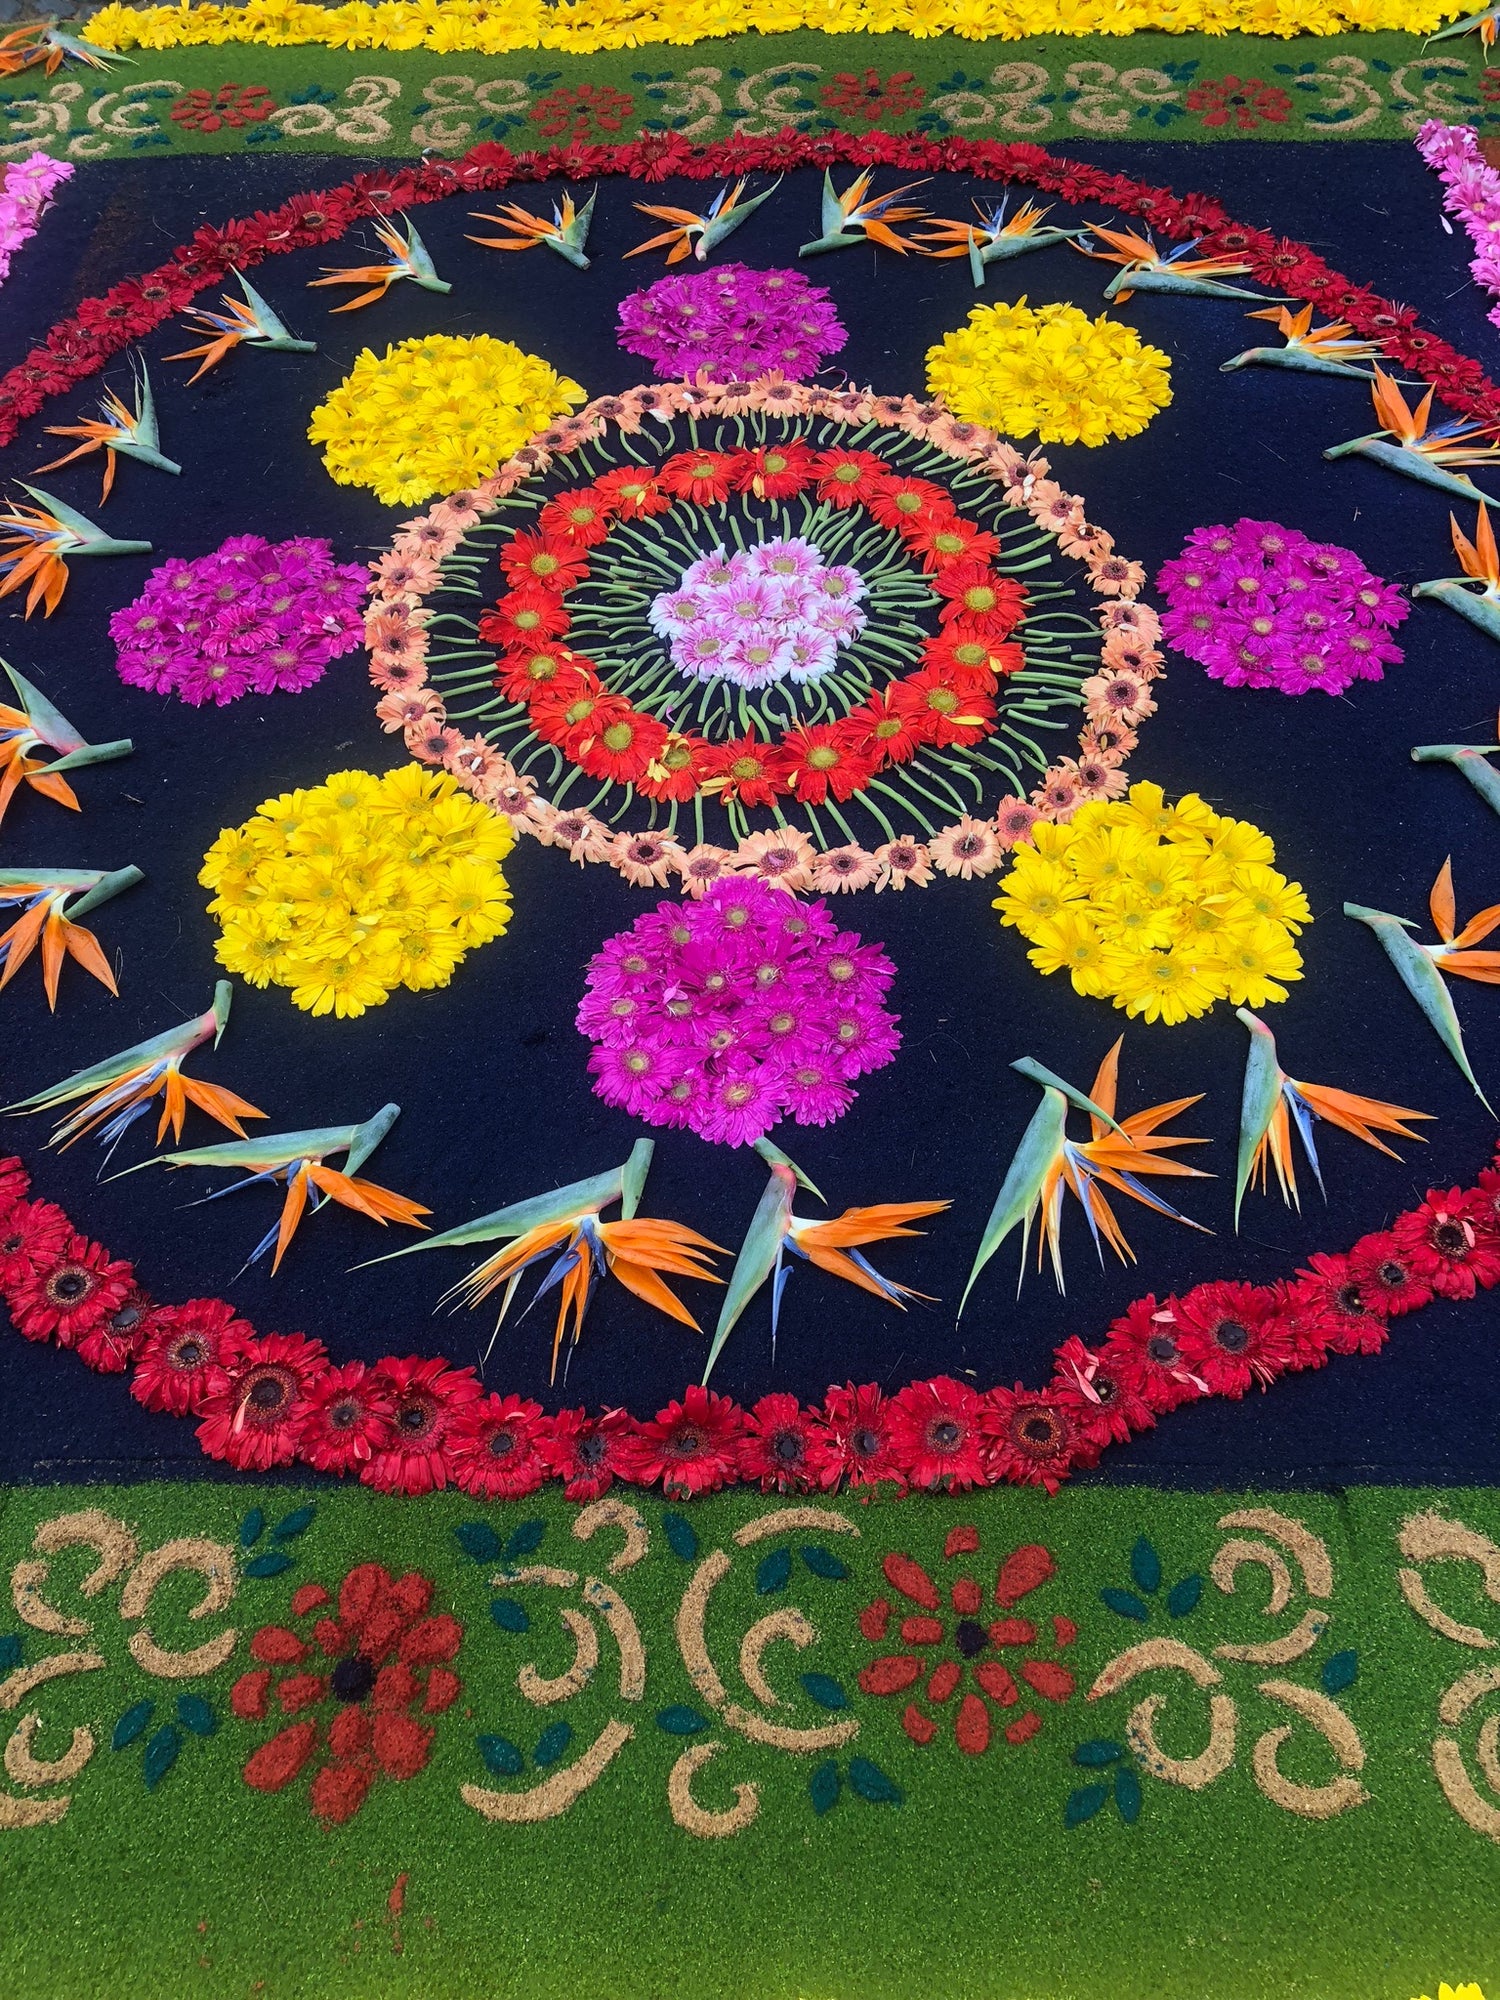 Beautiful floral pattern from Guatemala.